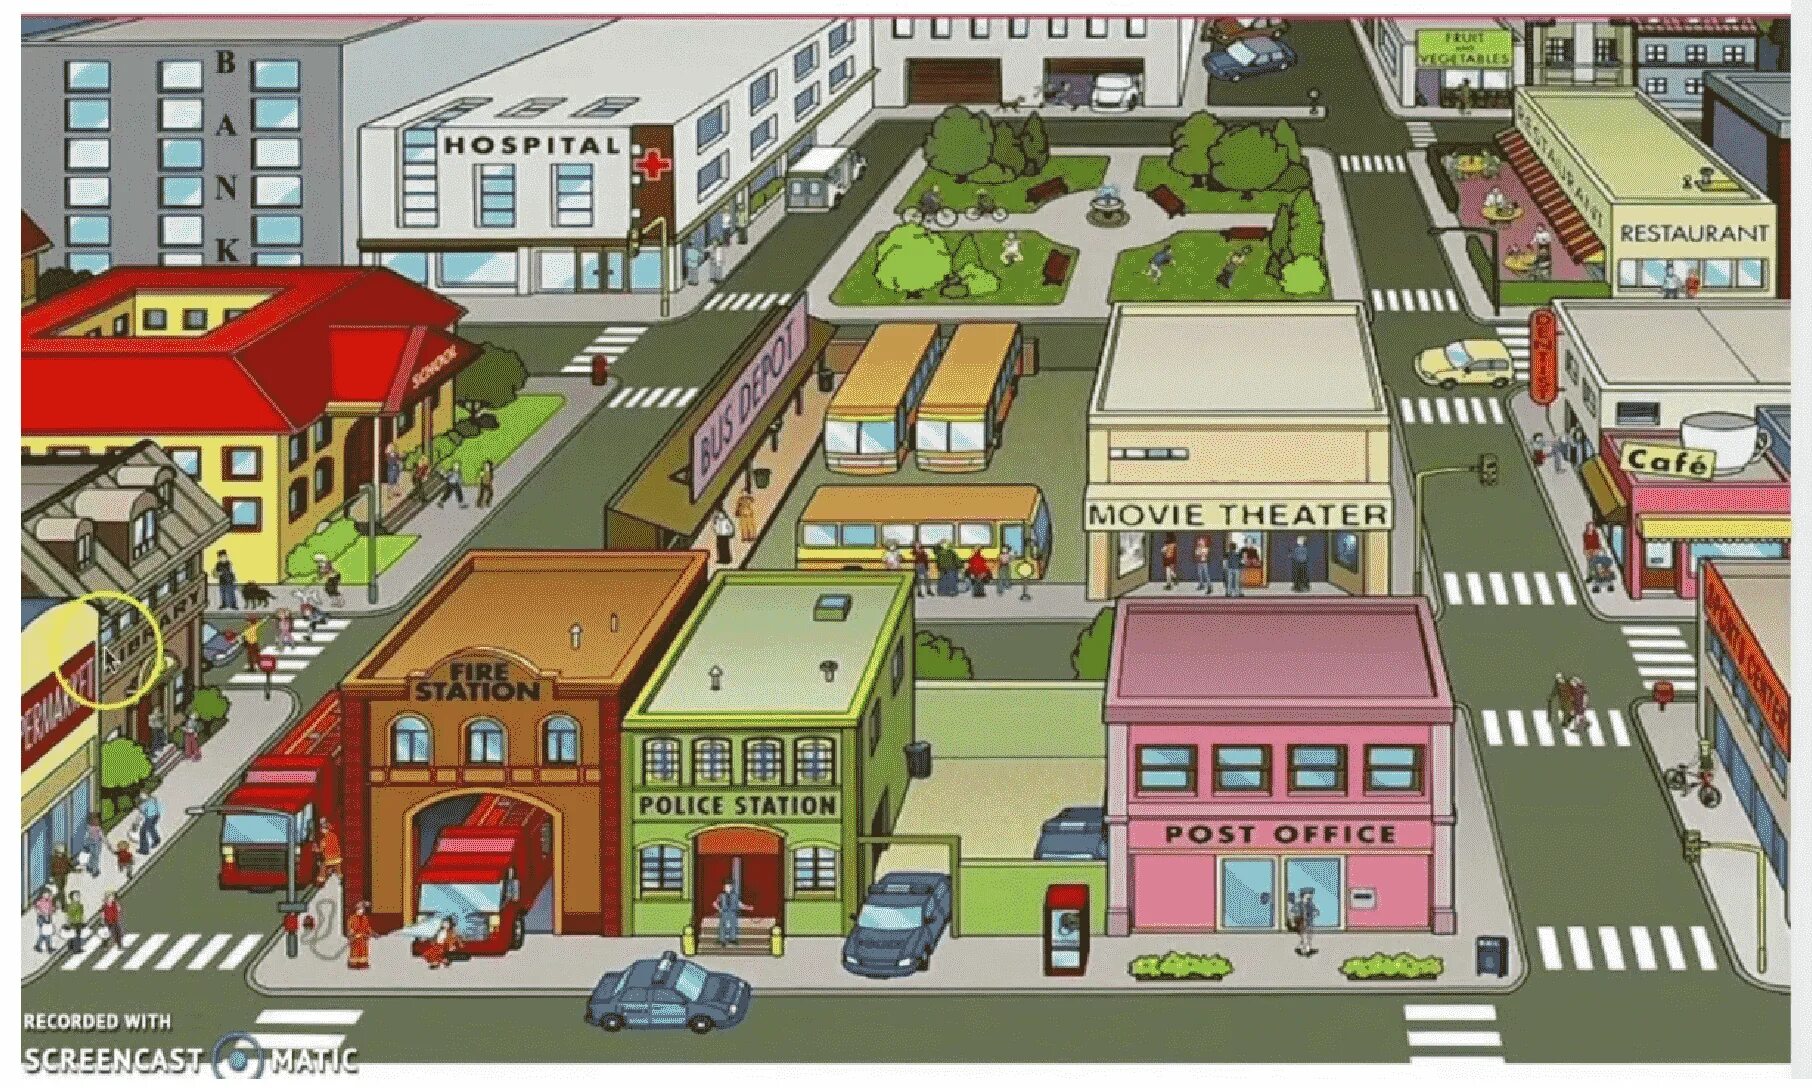 Places in Town для детей. Картинка города для описания. План города для детей. Здания на английском тема город. Through the town